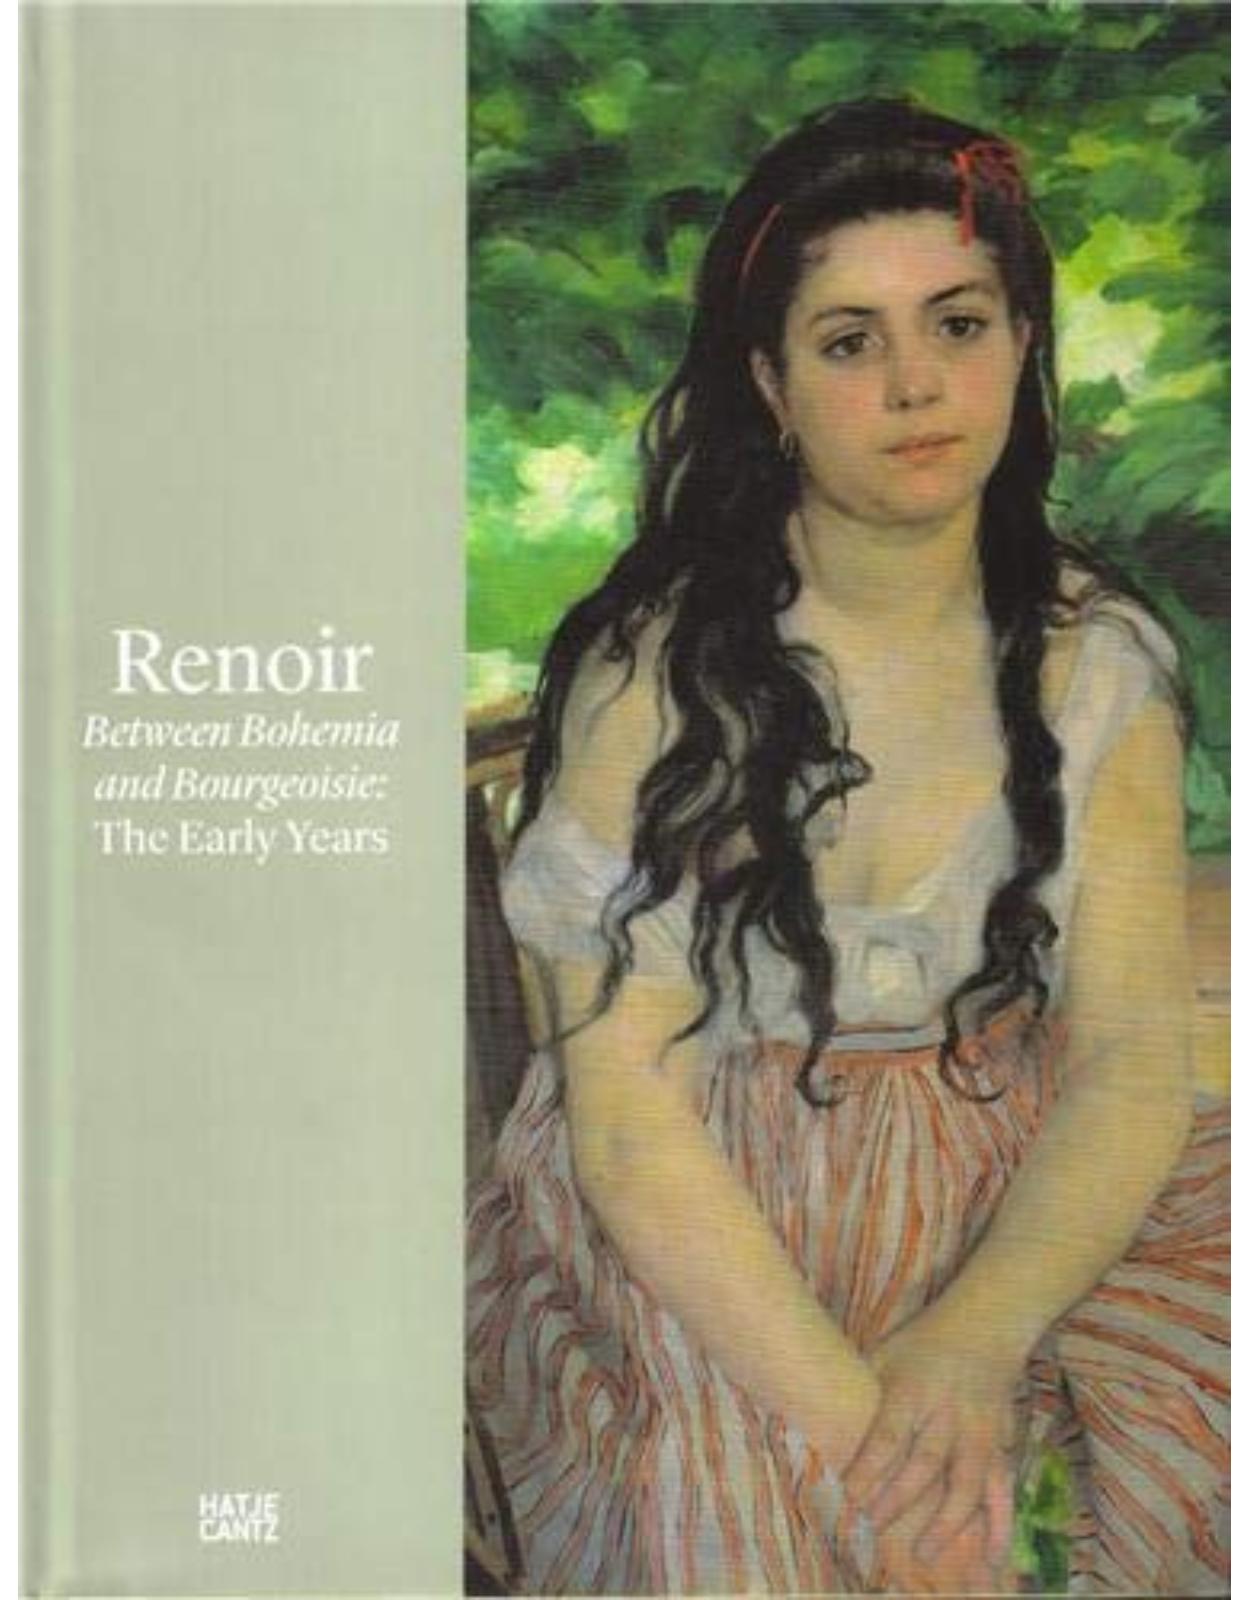 Renoir: Between Bohemia and Bourgeoisie: The Early Years